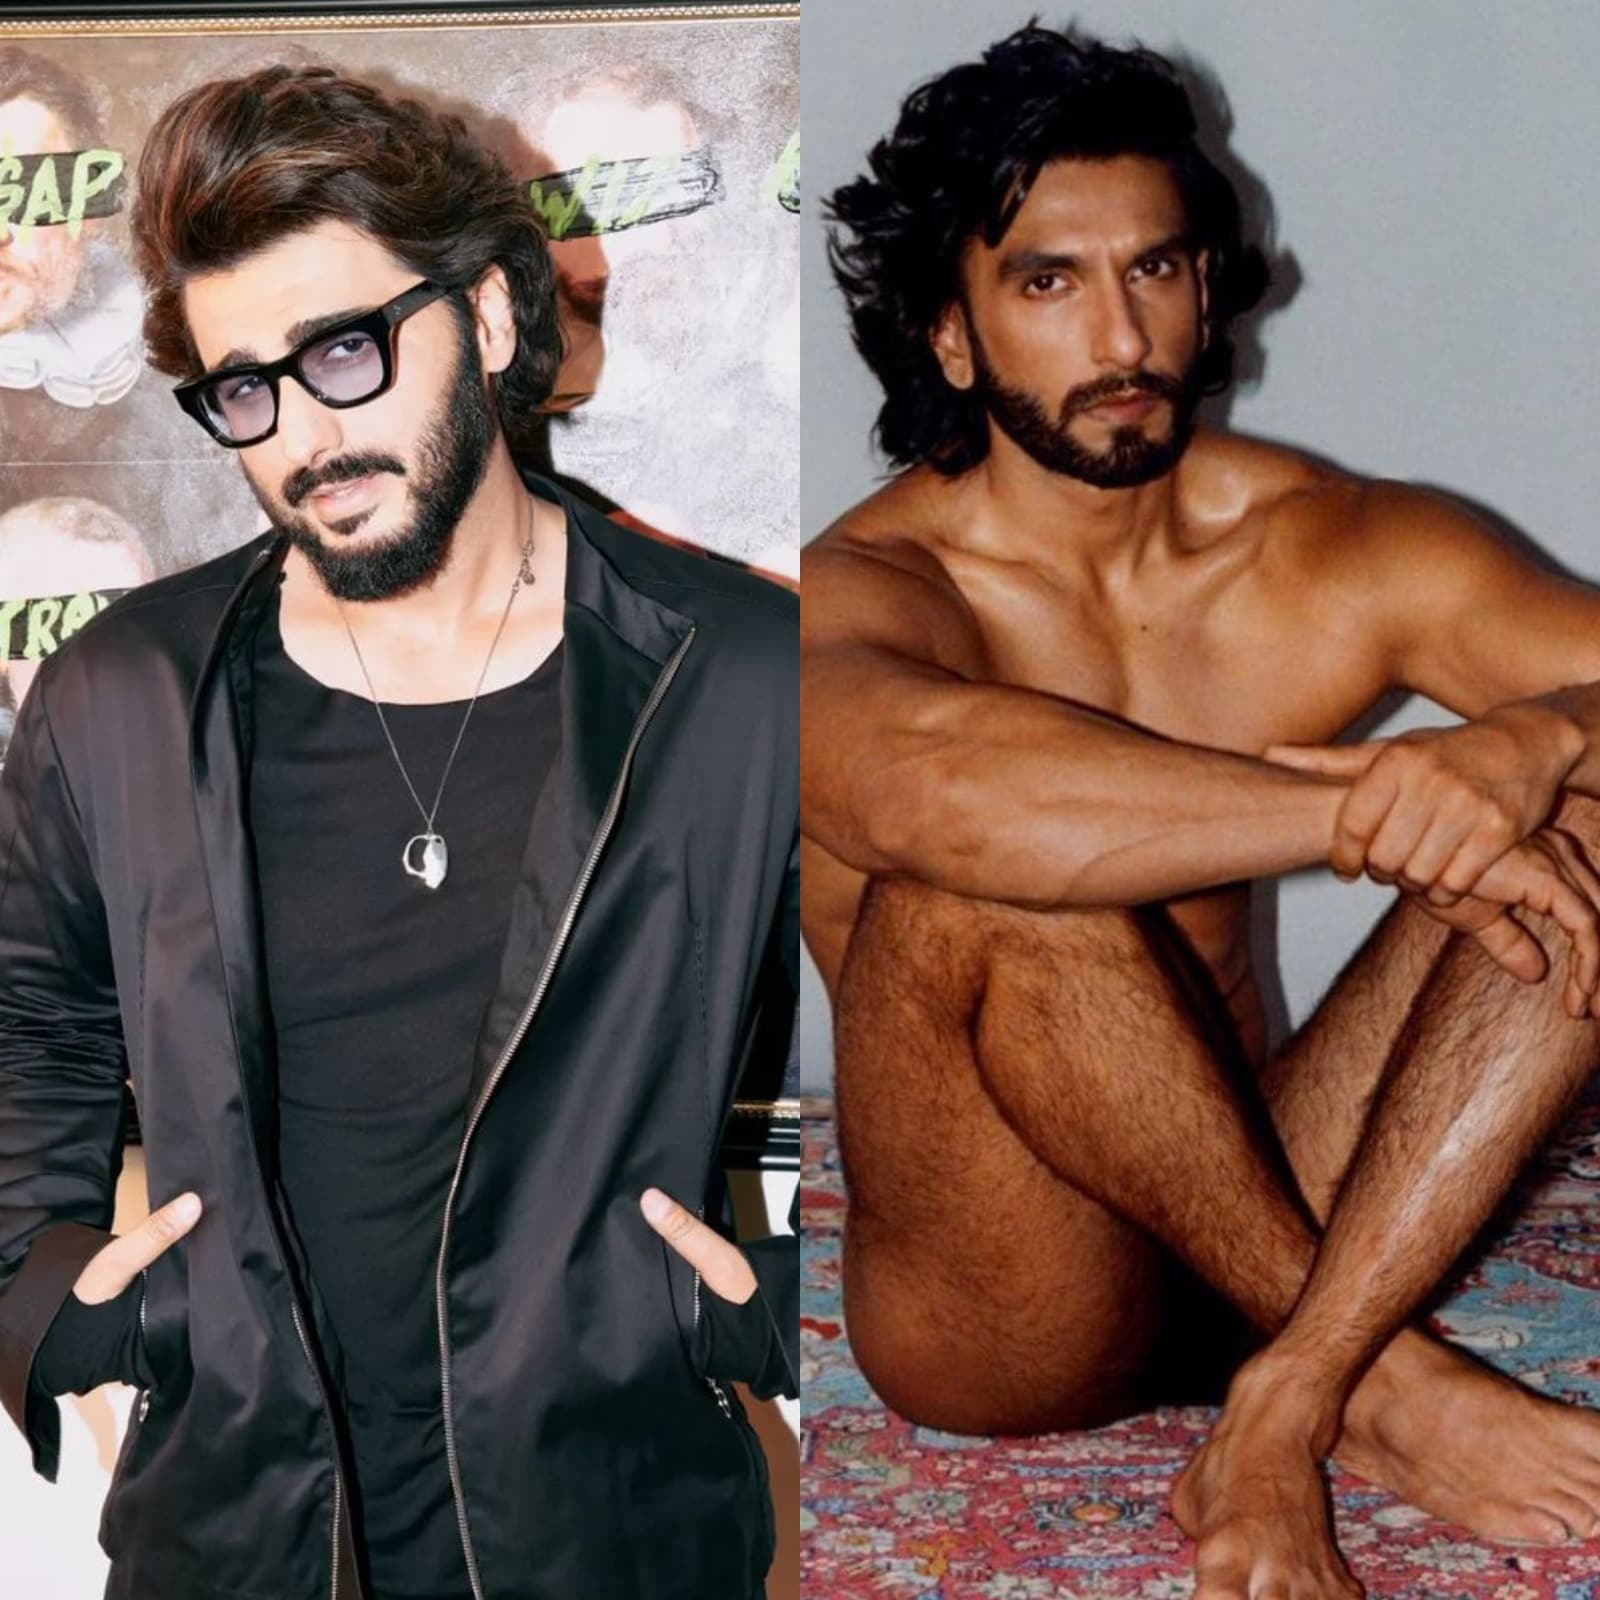 Akshra Singh Xnxx Hd - Arjun Kapoor Reacts To Ranveer Singh's Nude Photoshoot: 'He Should Be  Allowed To Be Himself' - News18